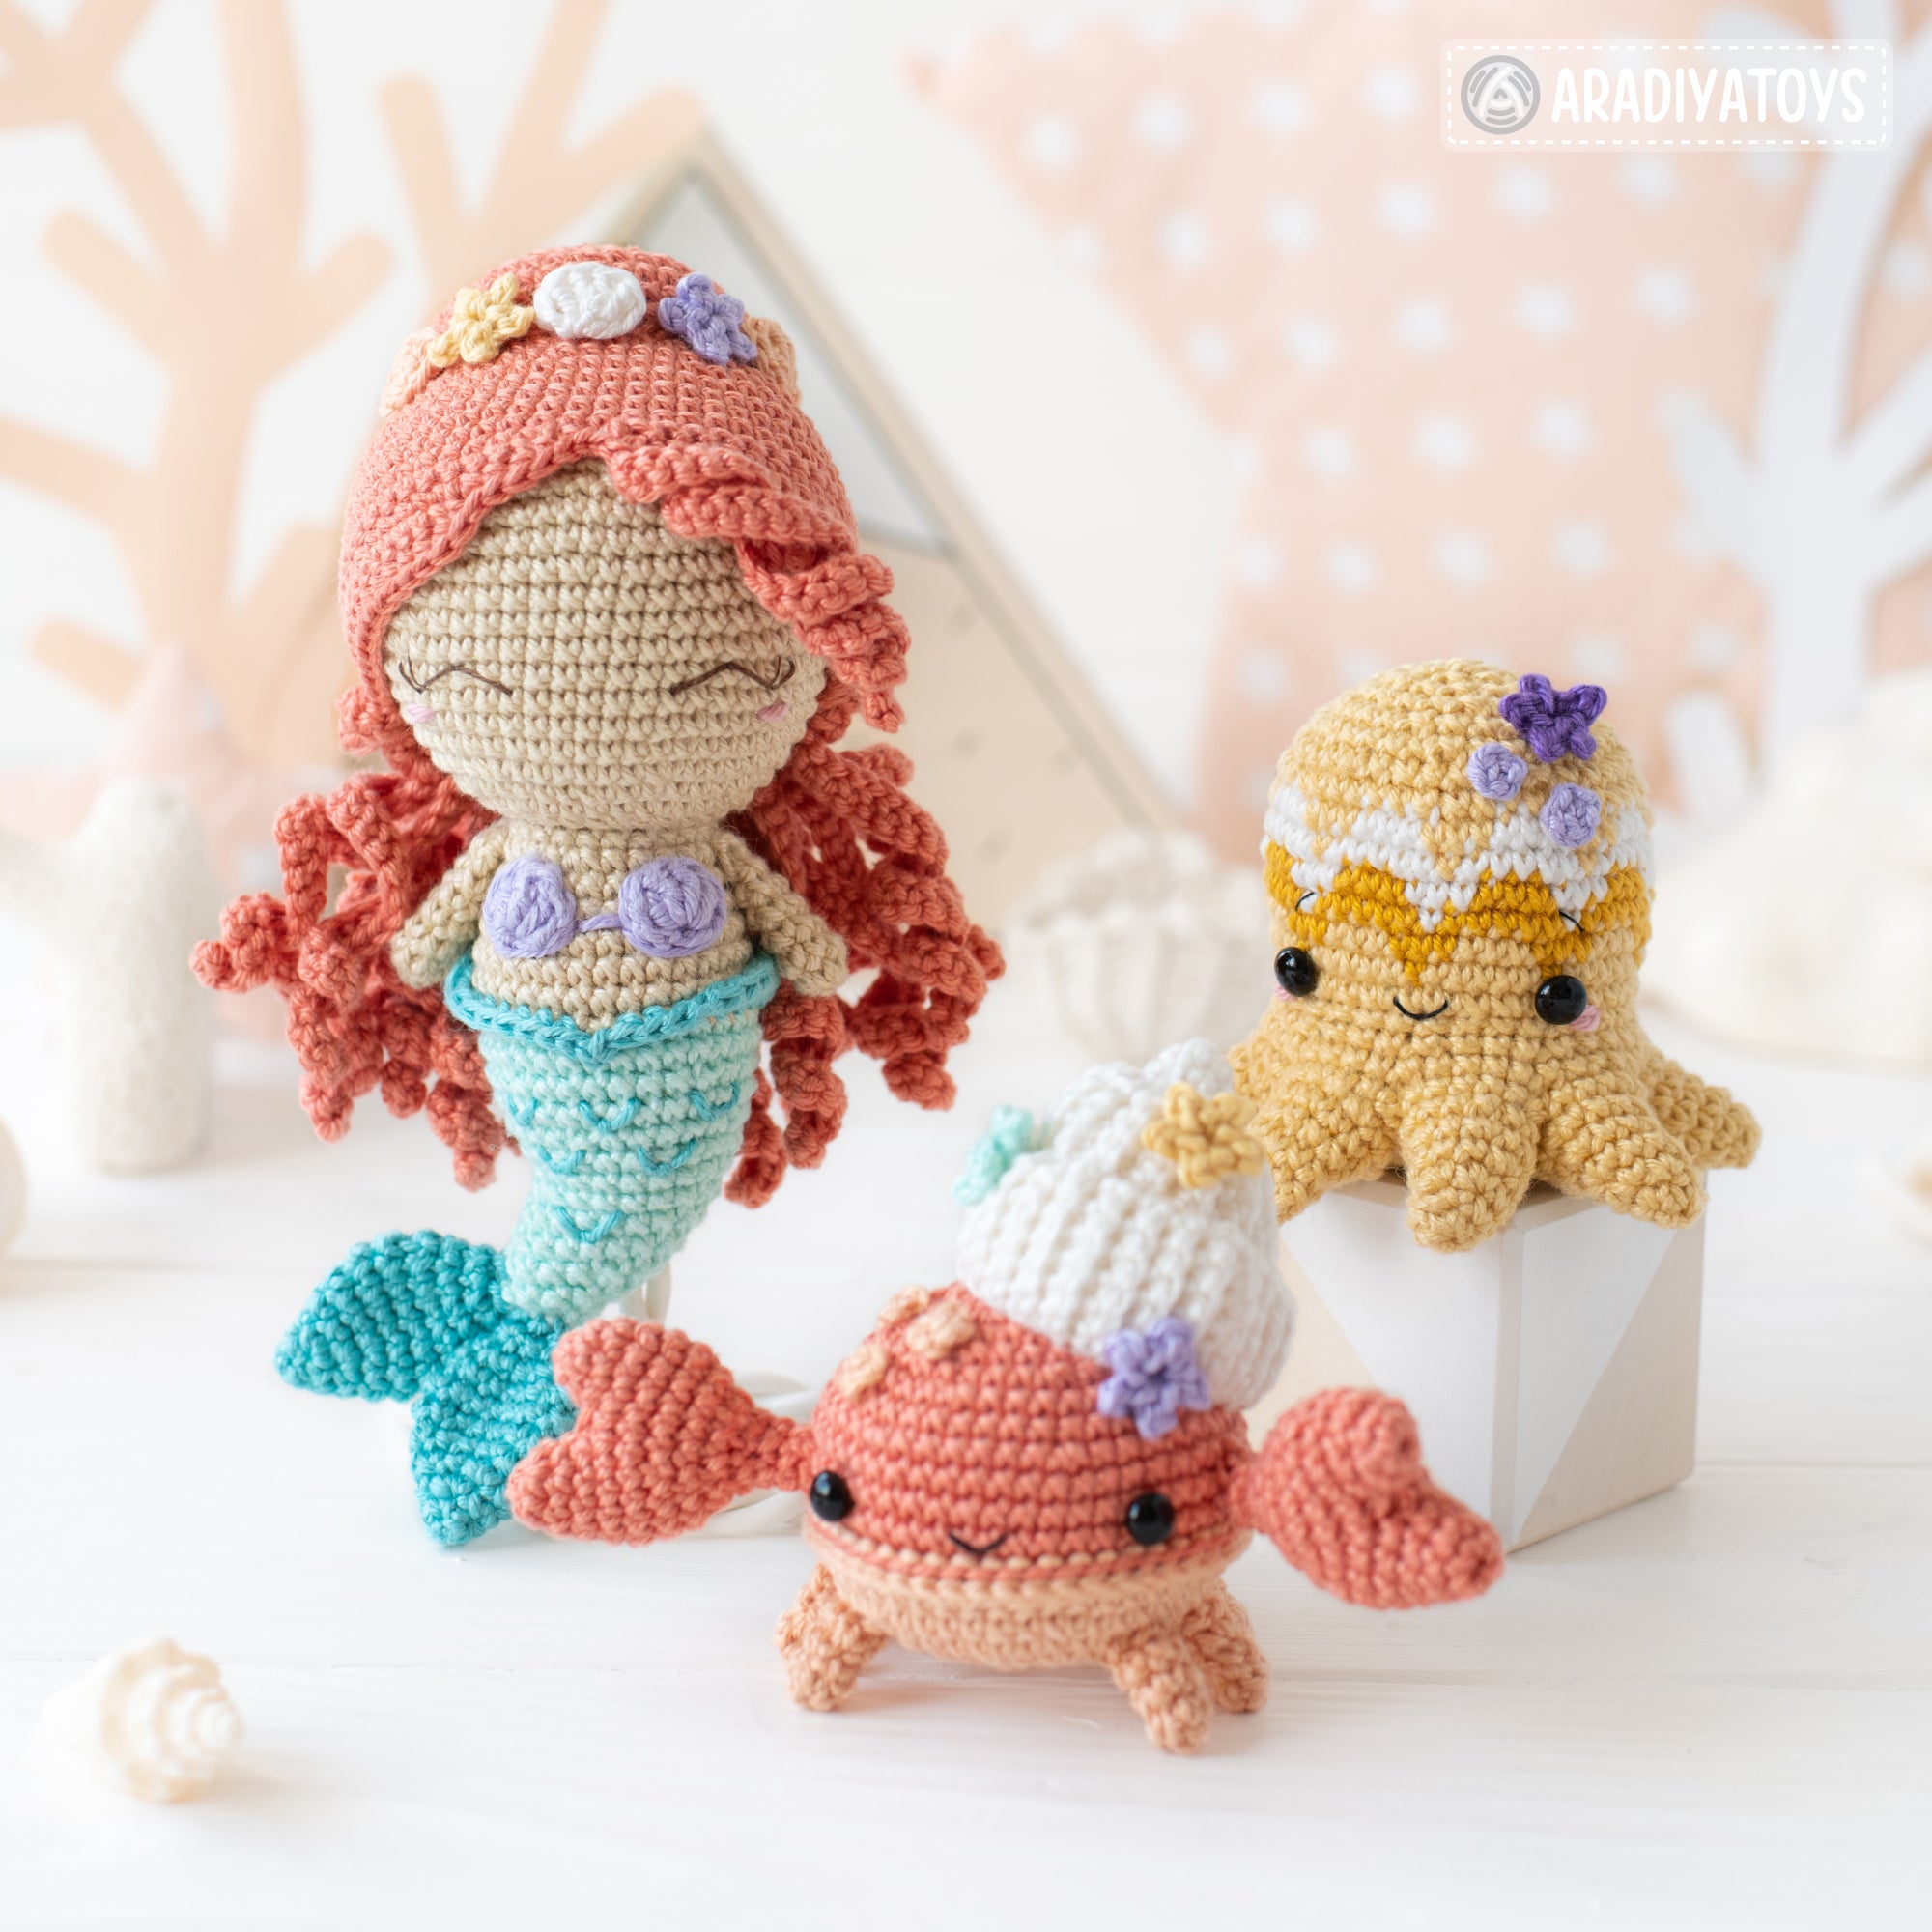 Kawaii Ocean Minis from “AradiyaToys Minis” collection / crochet patte